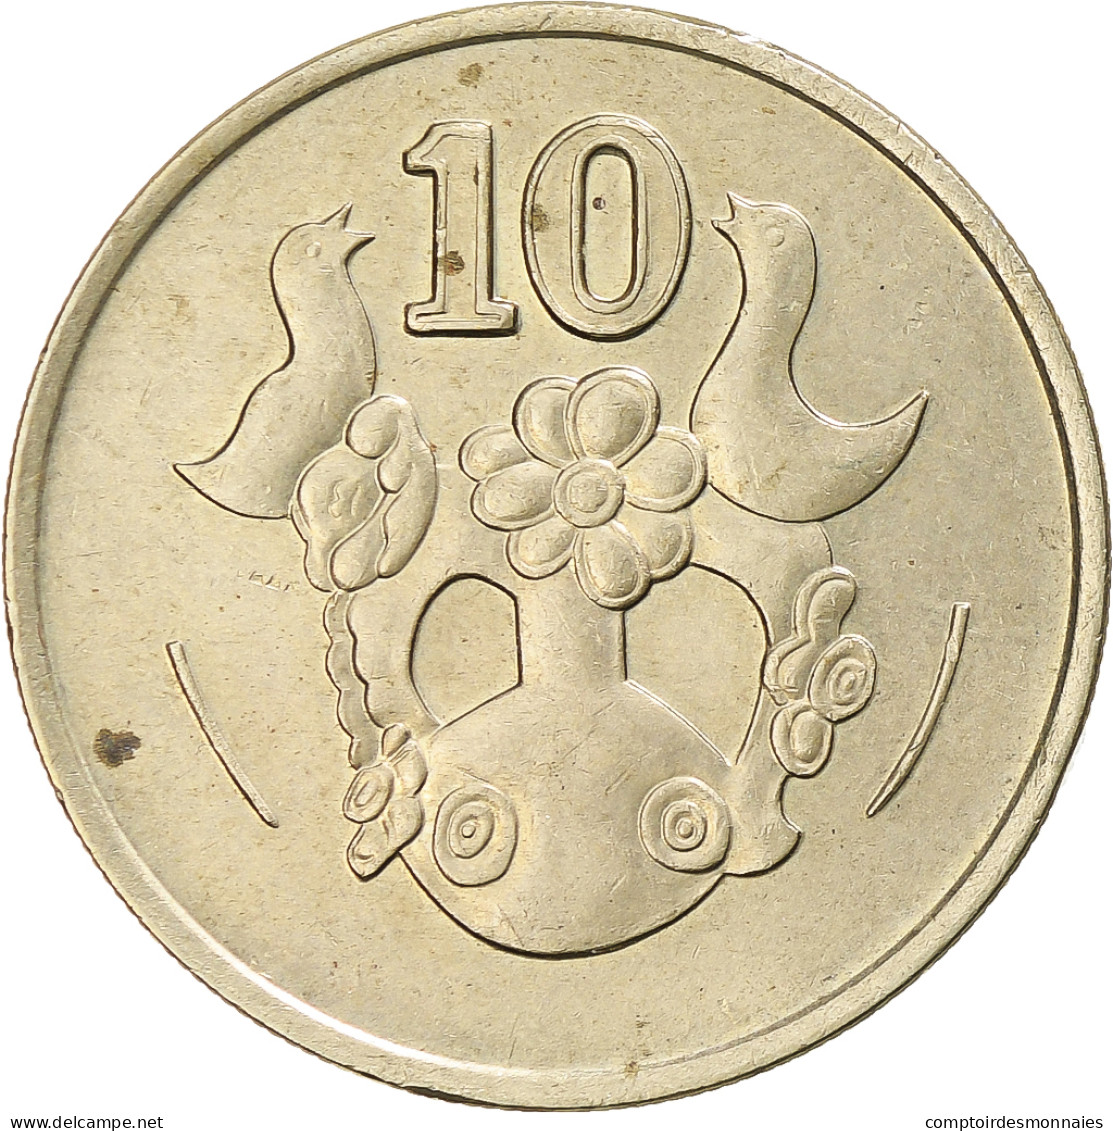 Chypre, 10 Cents, 1991 - Chypre